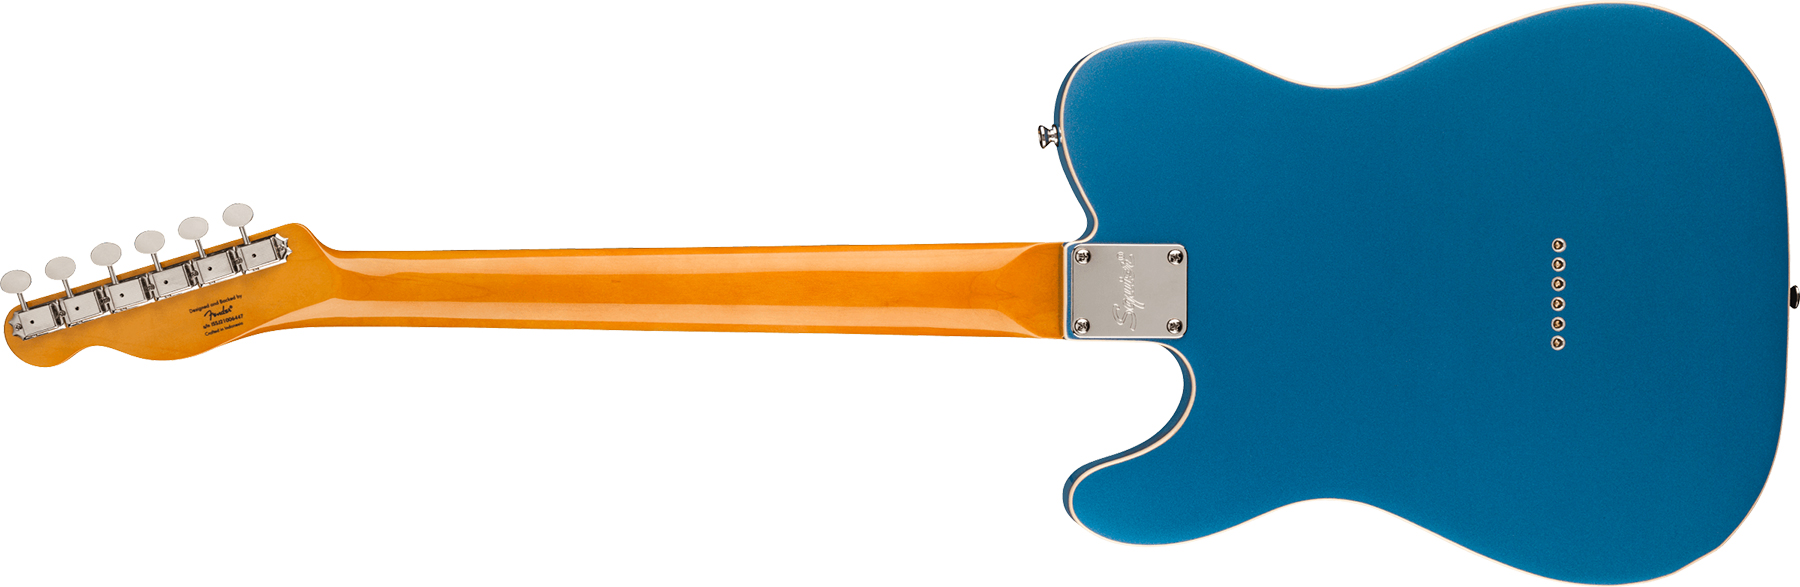 Squier Esquire Tele '60s Custom Classic Vibe Fsr Ltd Lau - Lake Placid Blue - Televorm elektrische gitaar - Variation 1